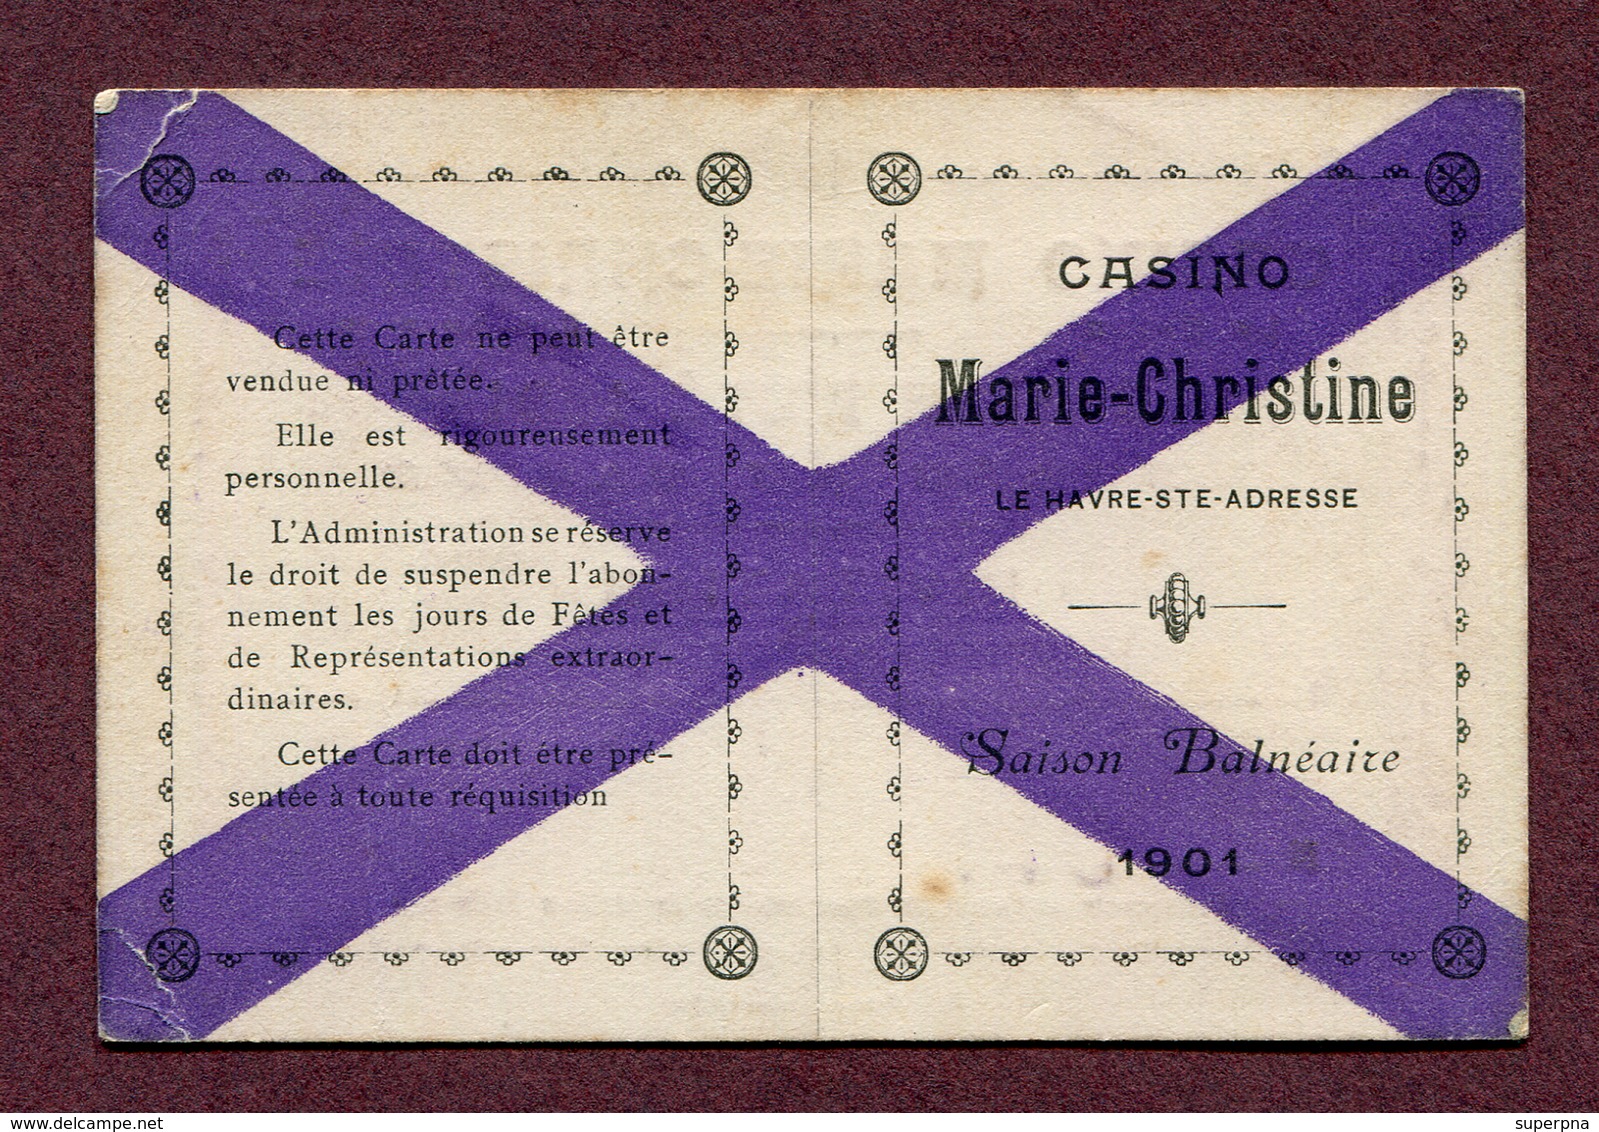 LE HAVRE : " CASINO MARIE-CHRISTINE " : CARTE D'ENTREE 1901 - Historical Documents